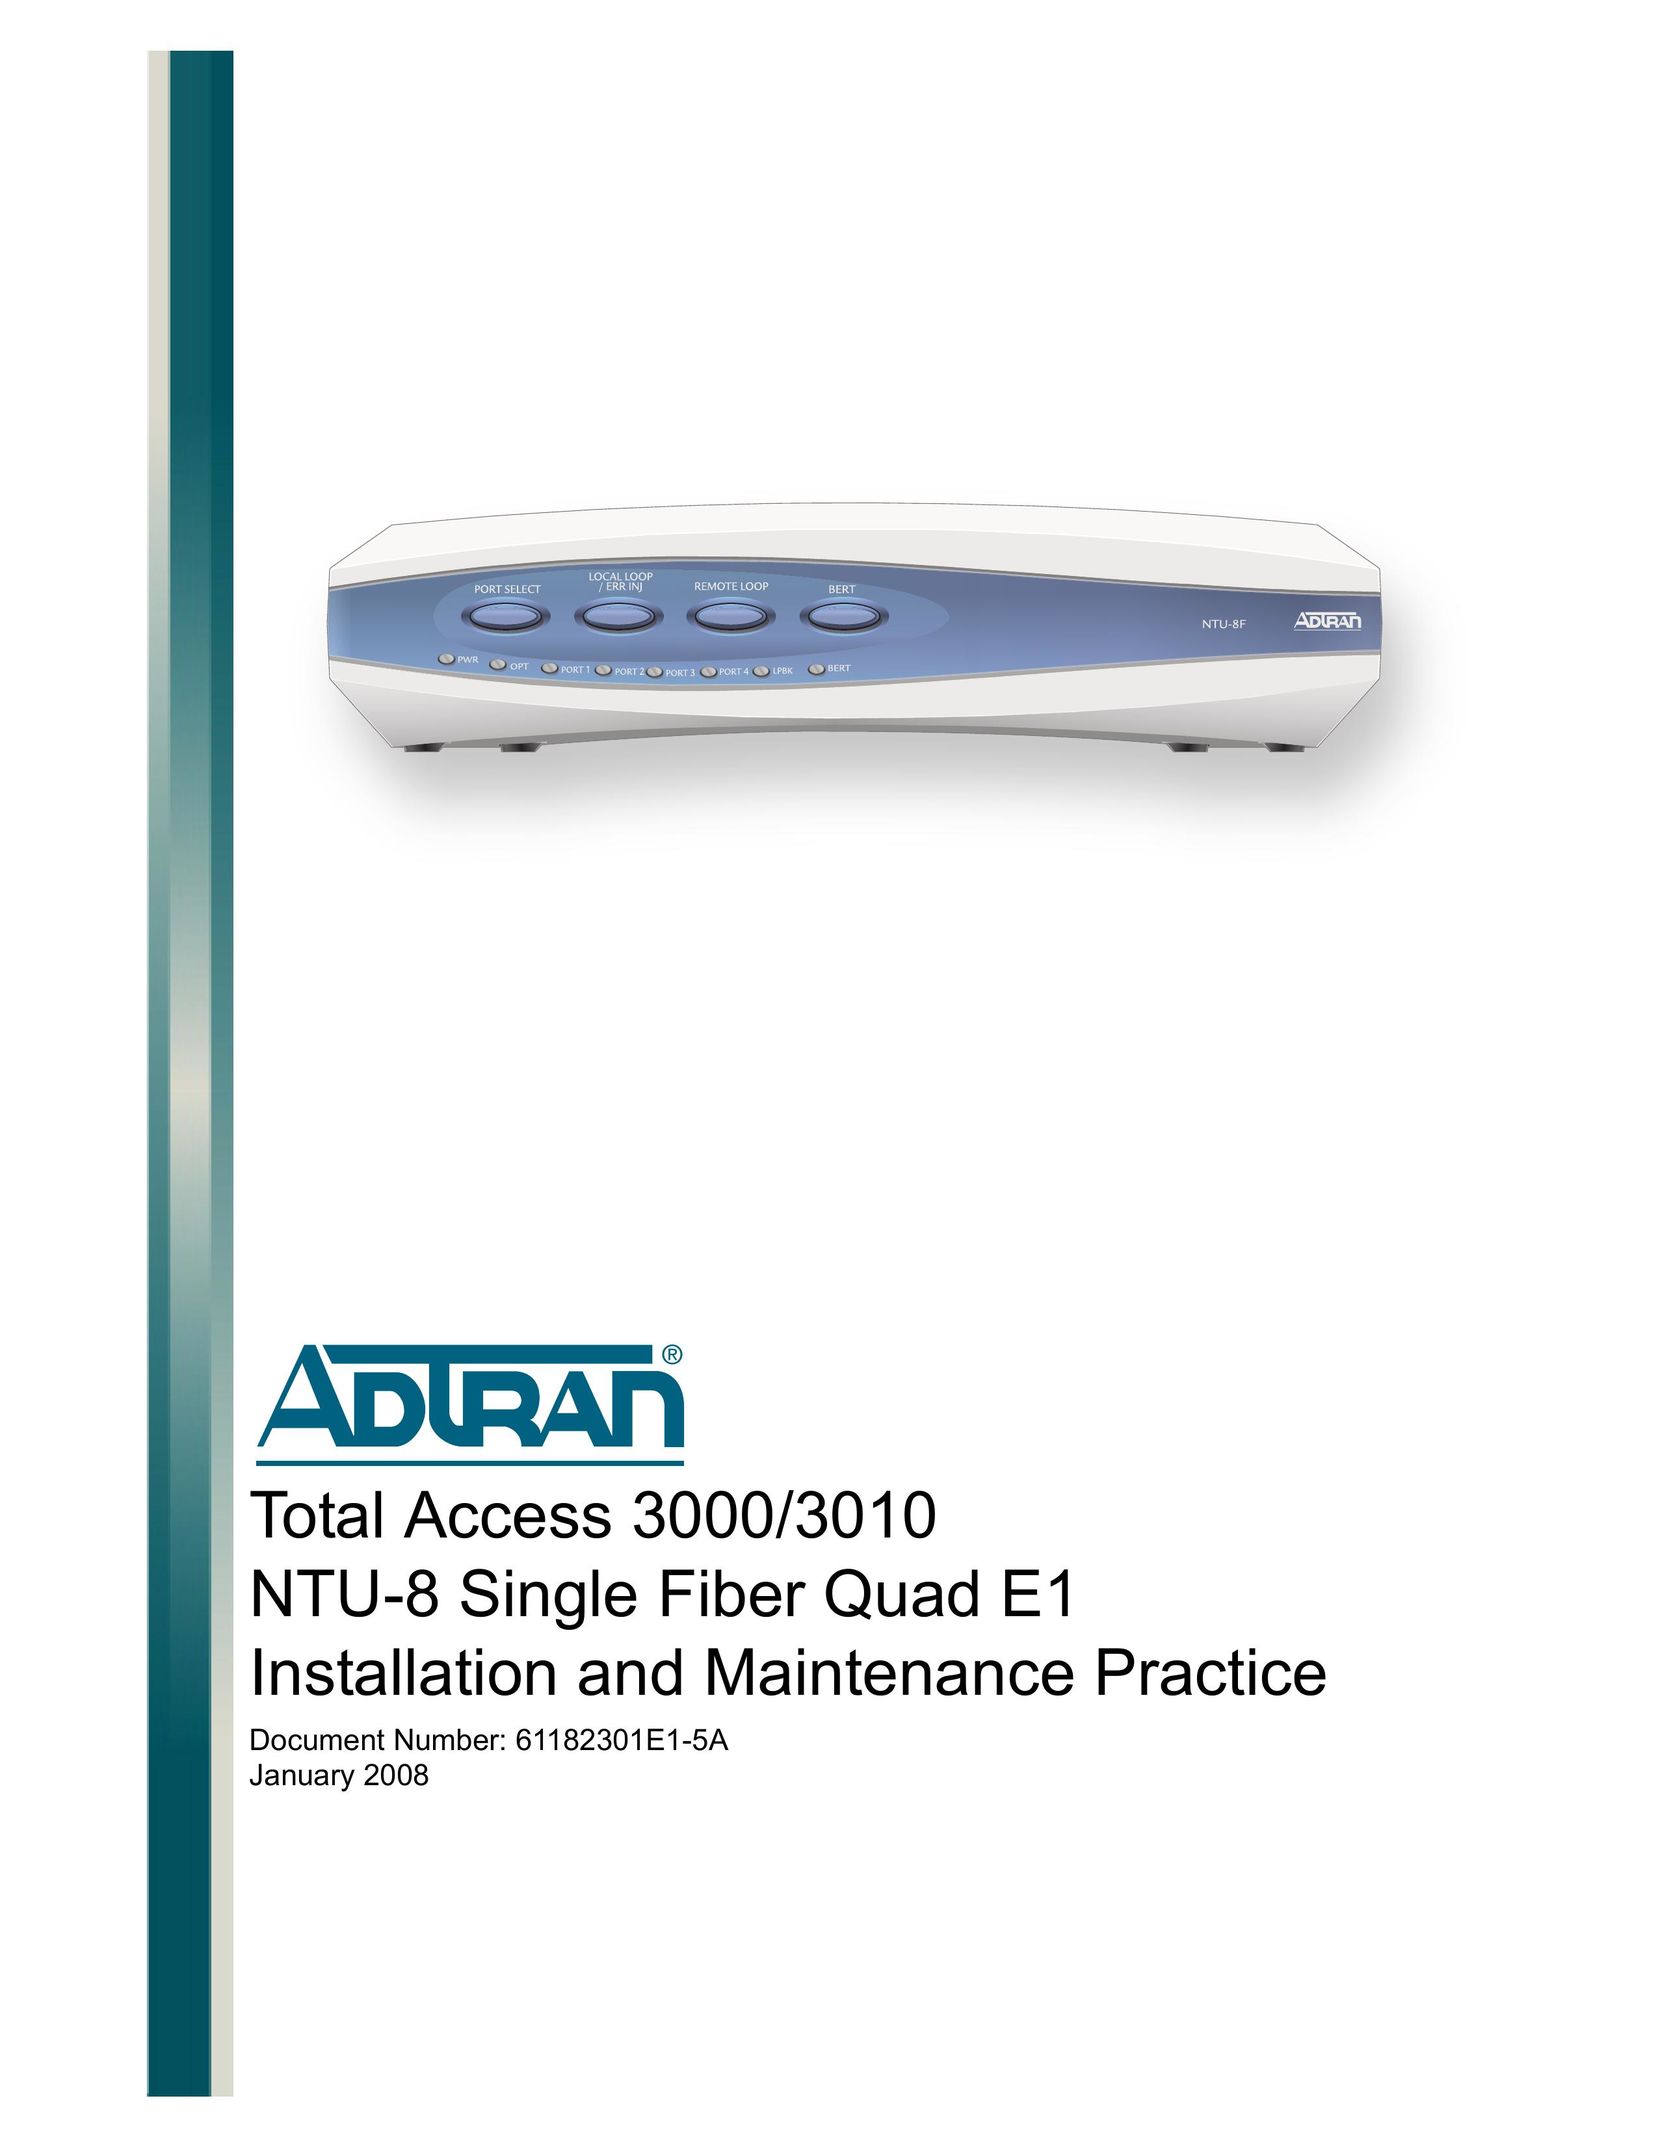 ADTRAN 3010 NTU-8 Network Card User Manual